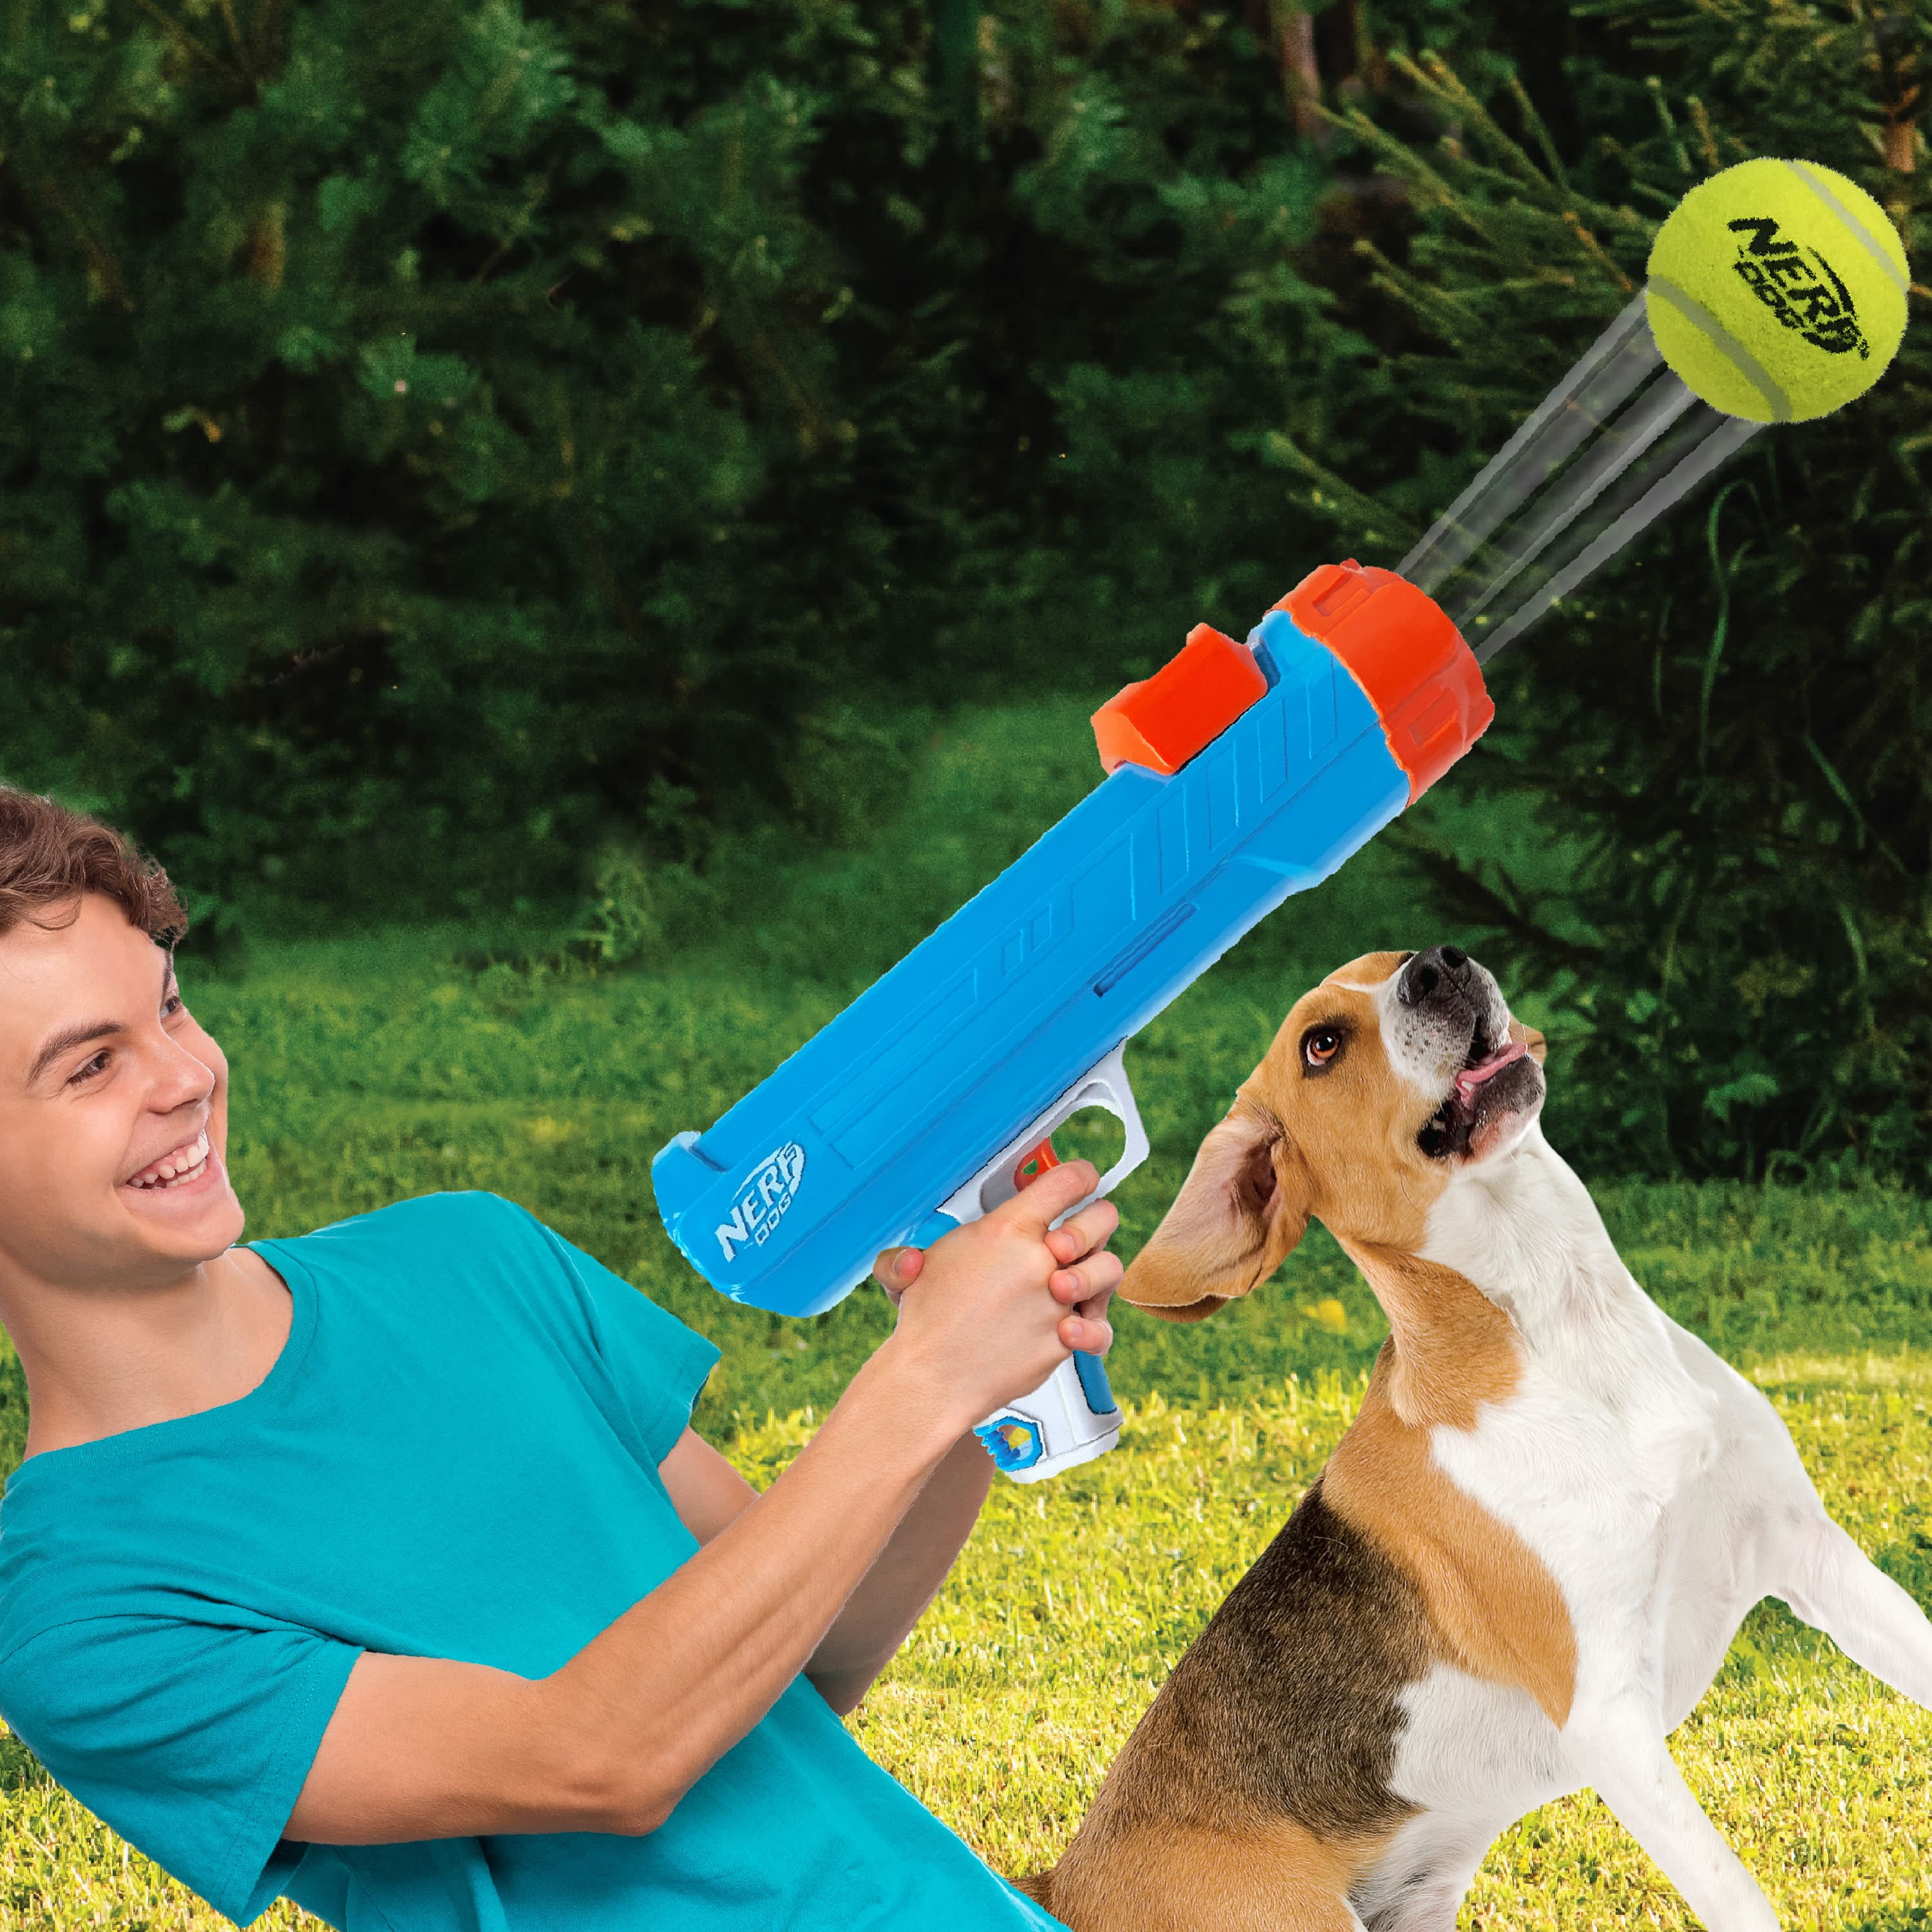 NERF DOG Tennis Ball Blaster Dog Toy, Medium 